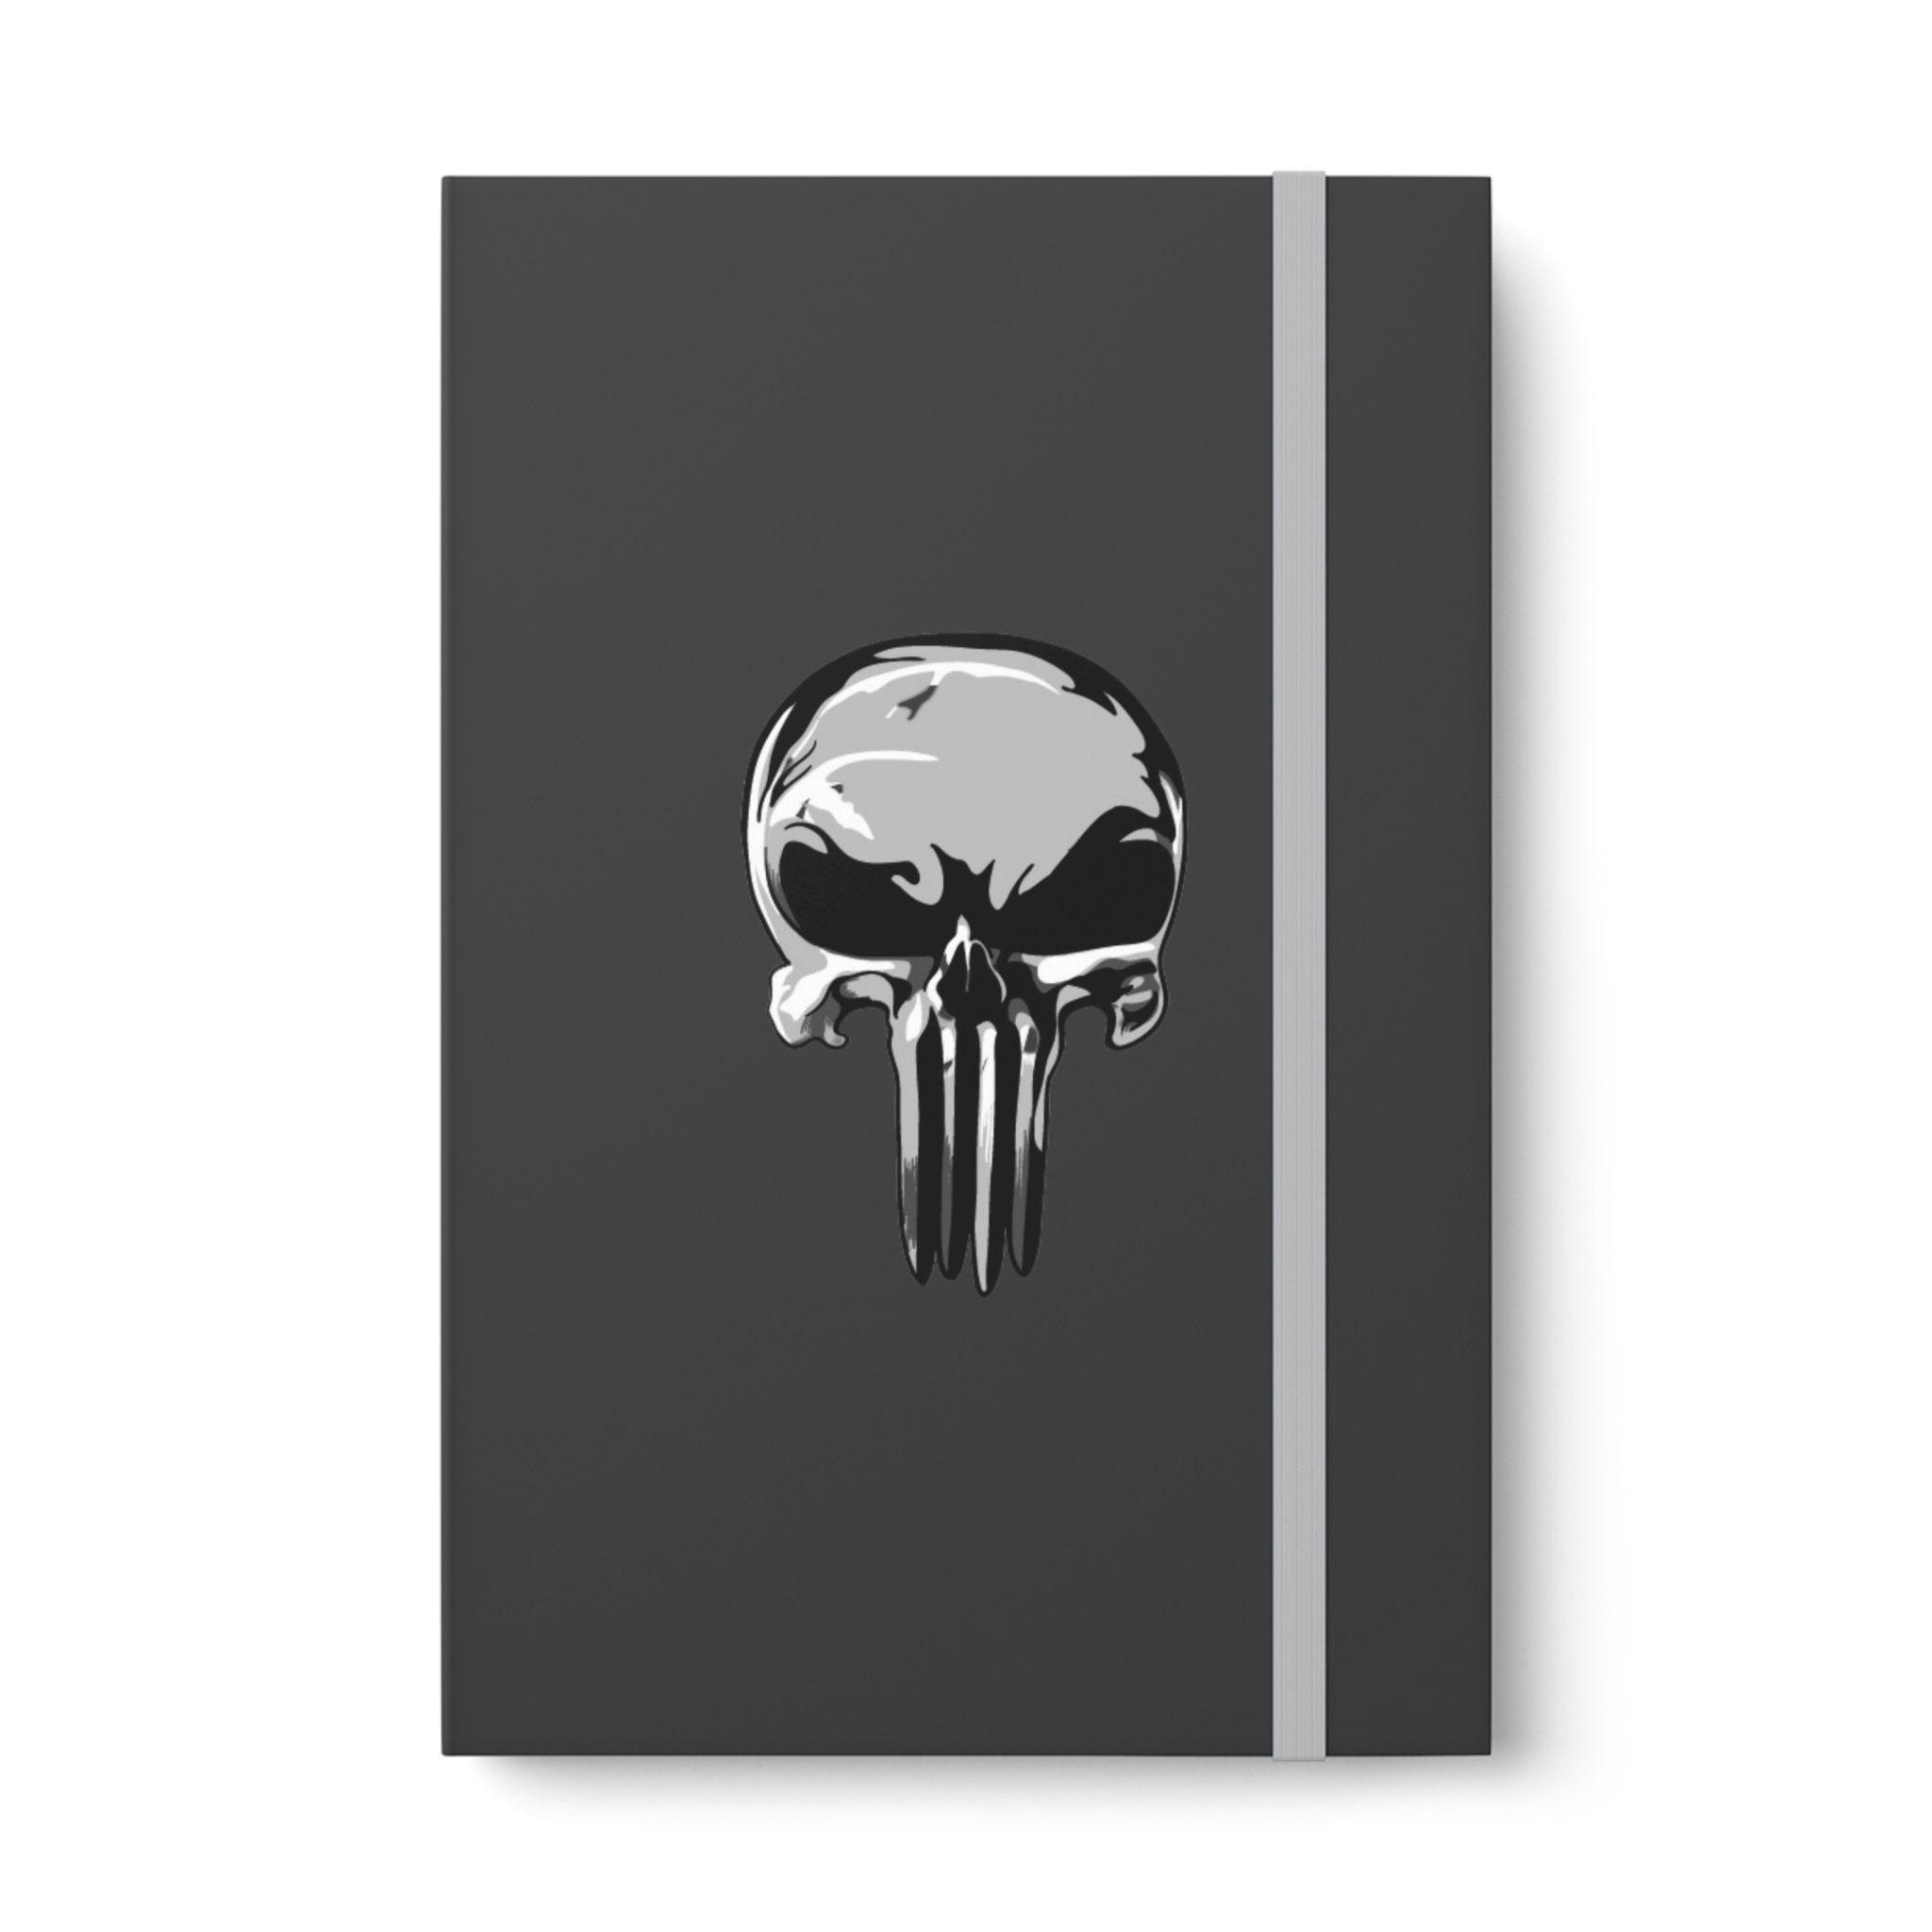 Carnet Bloc Notes A5 Skull Punisher - 55580